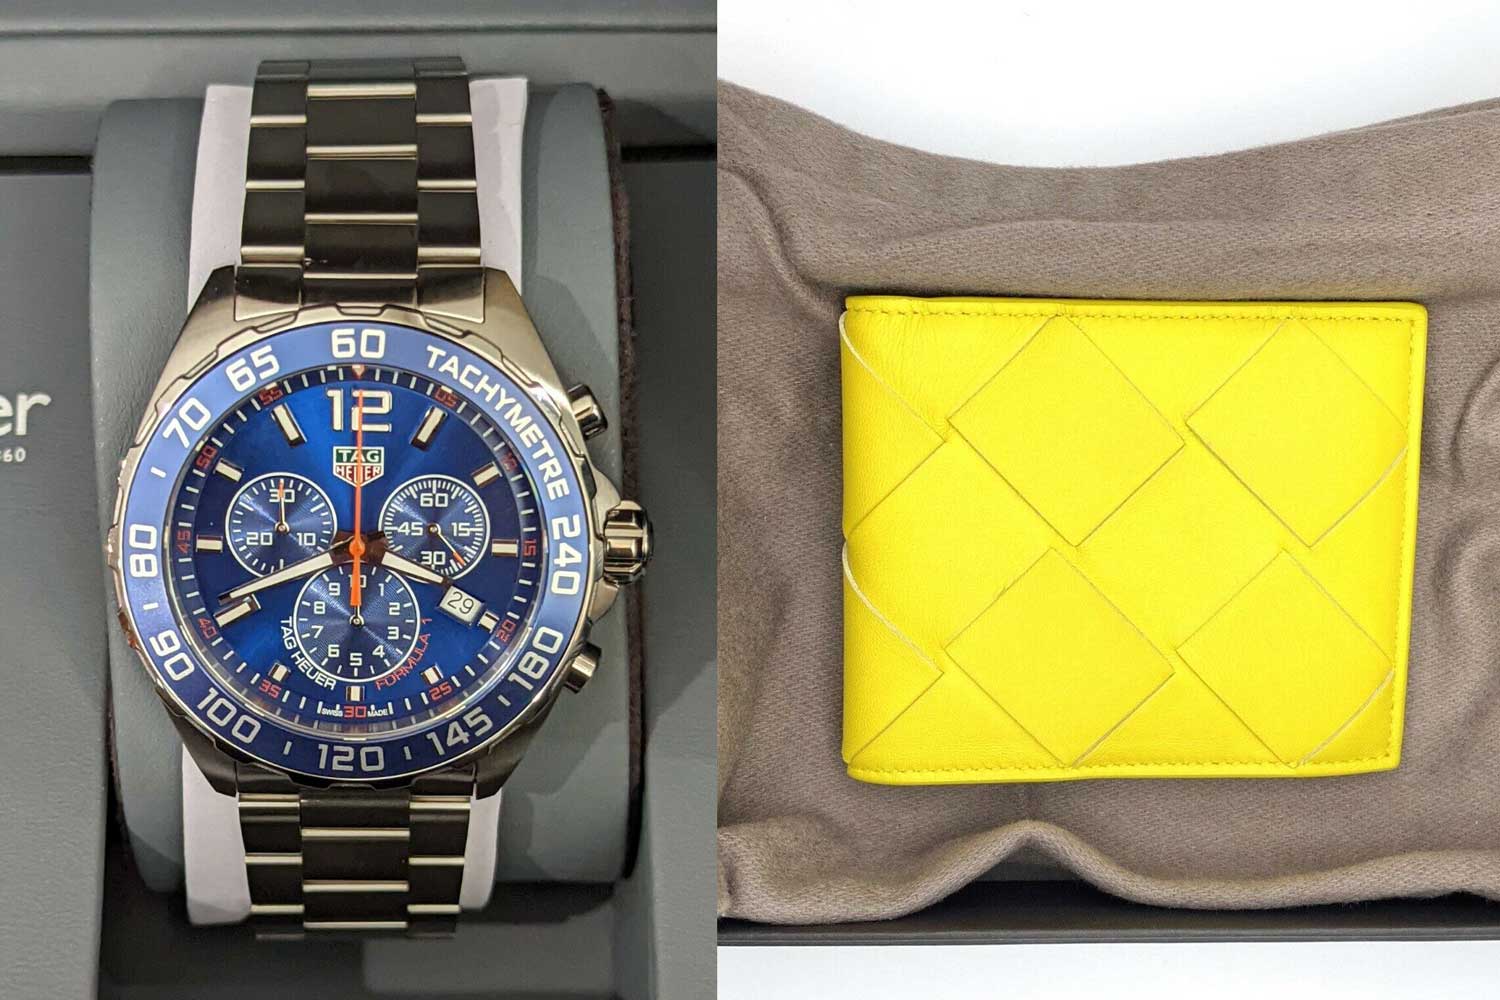 TAG Heuer Formula 1 Quartz Chronograph and Bottega Veneta wallet in bright yellow color